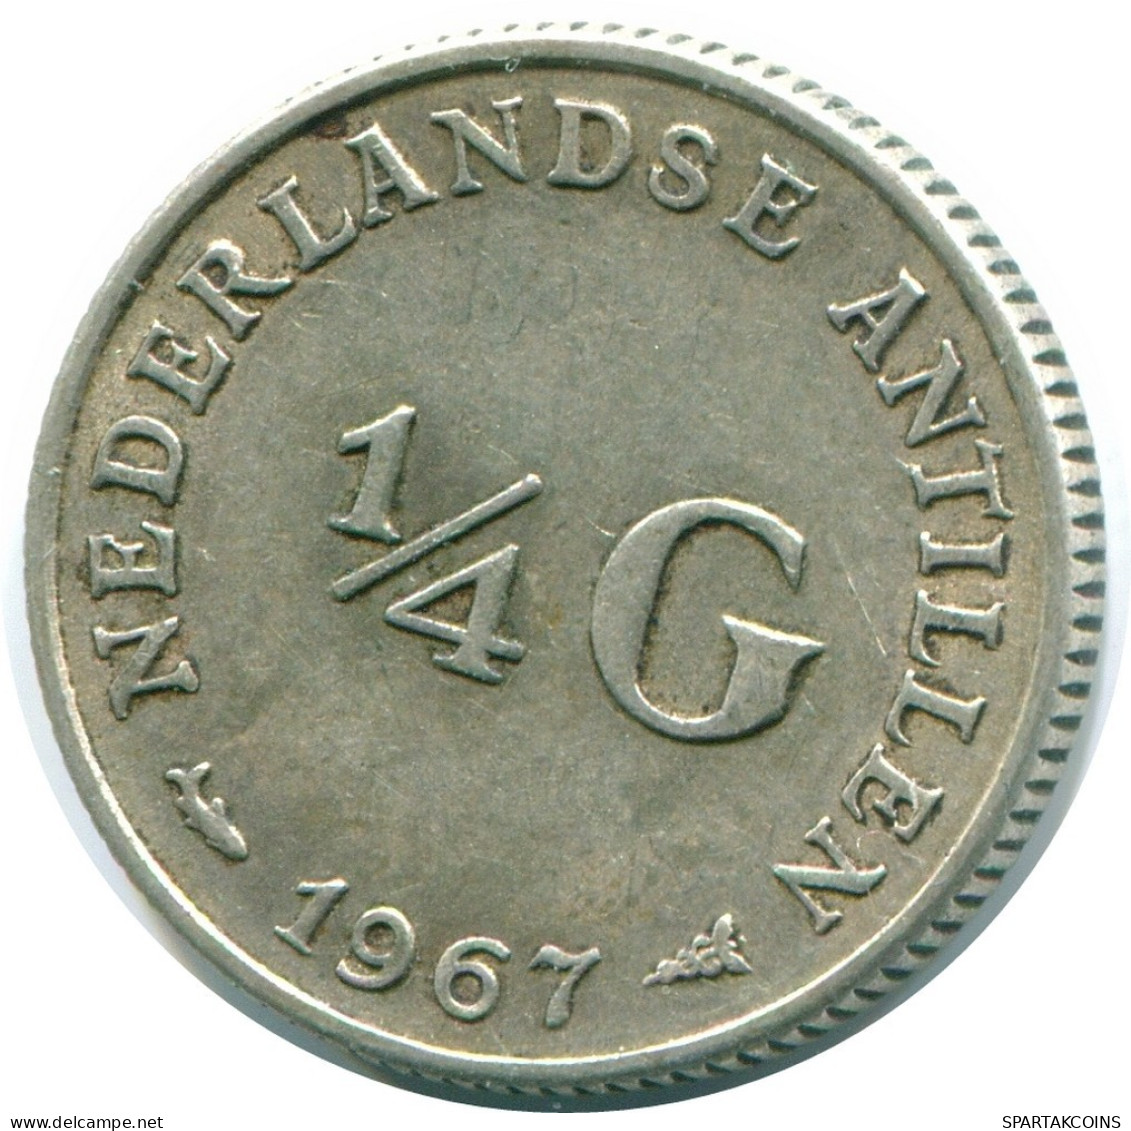 1/4 GULDEN 1967 NETHERLANDS ANTILLES SILVER Colonial Coin #NL11512.4.U.A - Antilles Néerlandaises